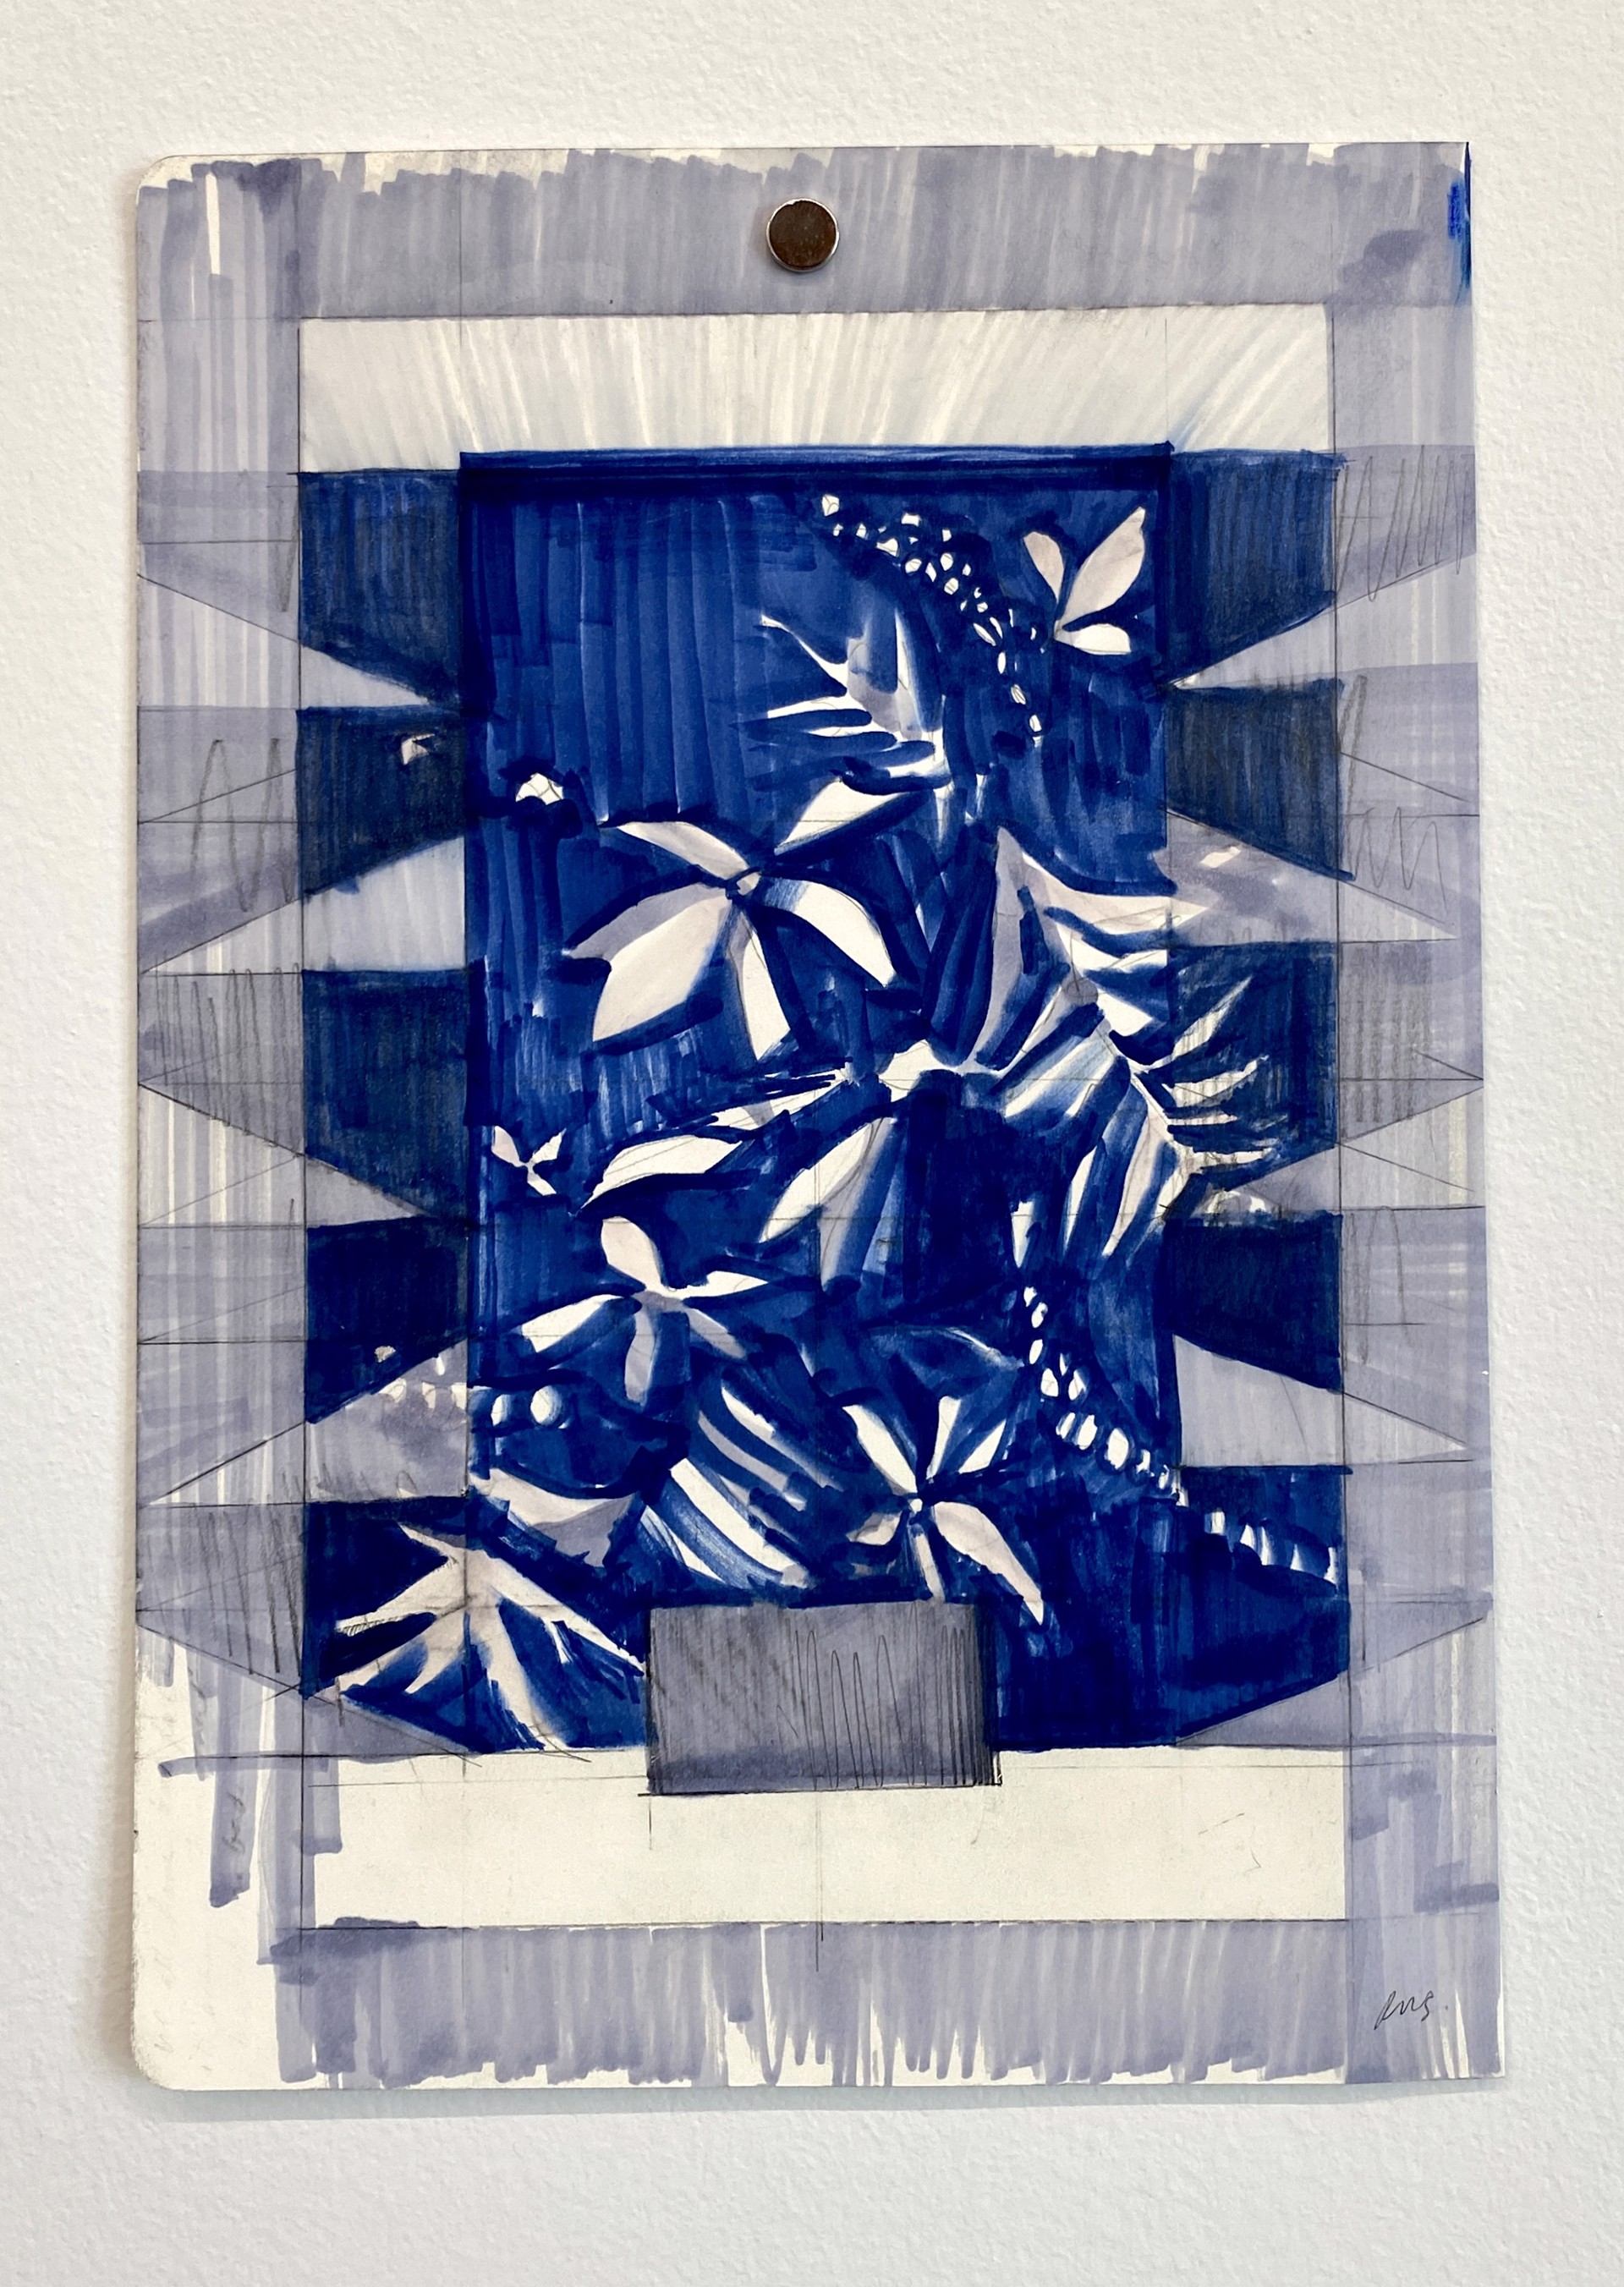 Dutch Tile Wall Exterior by Rachel Wolfson Smith